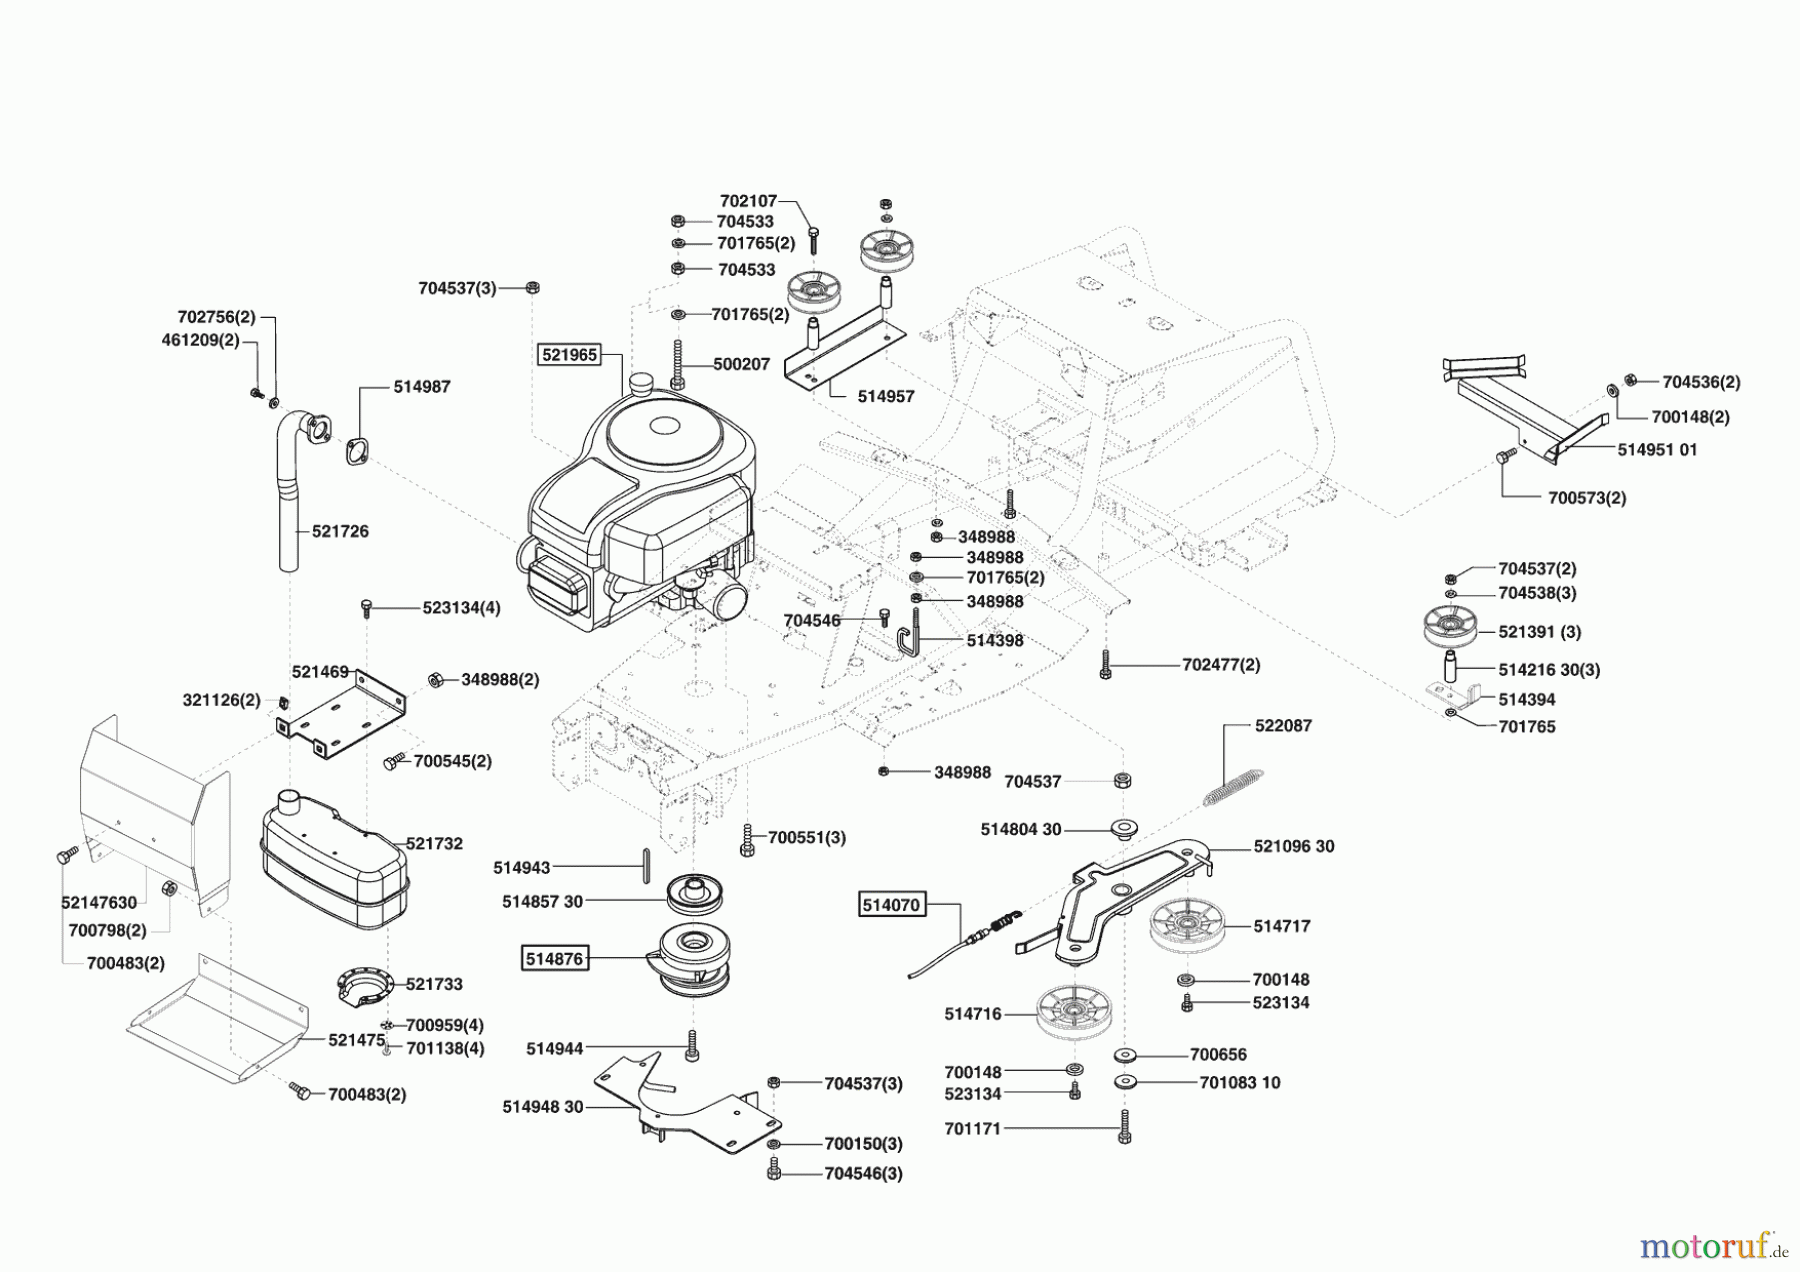  Powerline Gartentechnik Rasentraktor T 15-102 S ab 10/2003 Seite 4